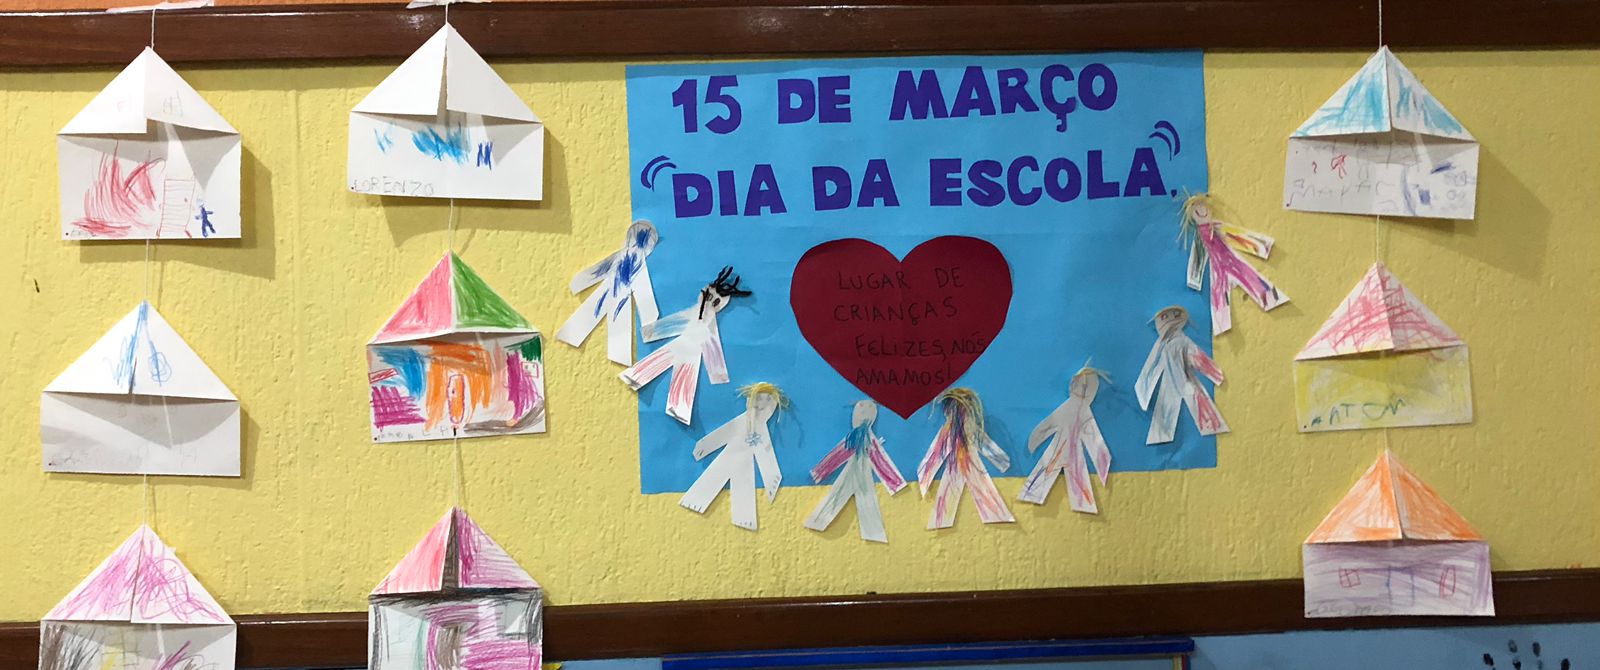 15 de Maro, dia da escola - Infantil I Colgio Passionista Santa Maria